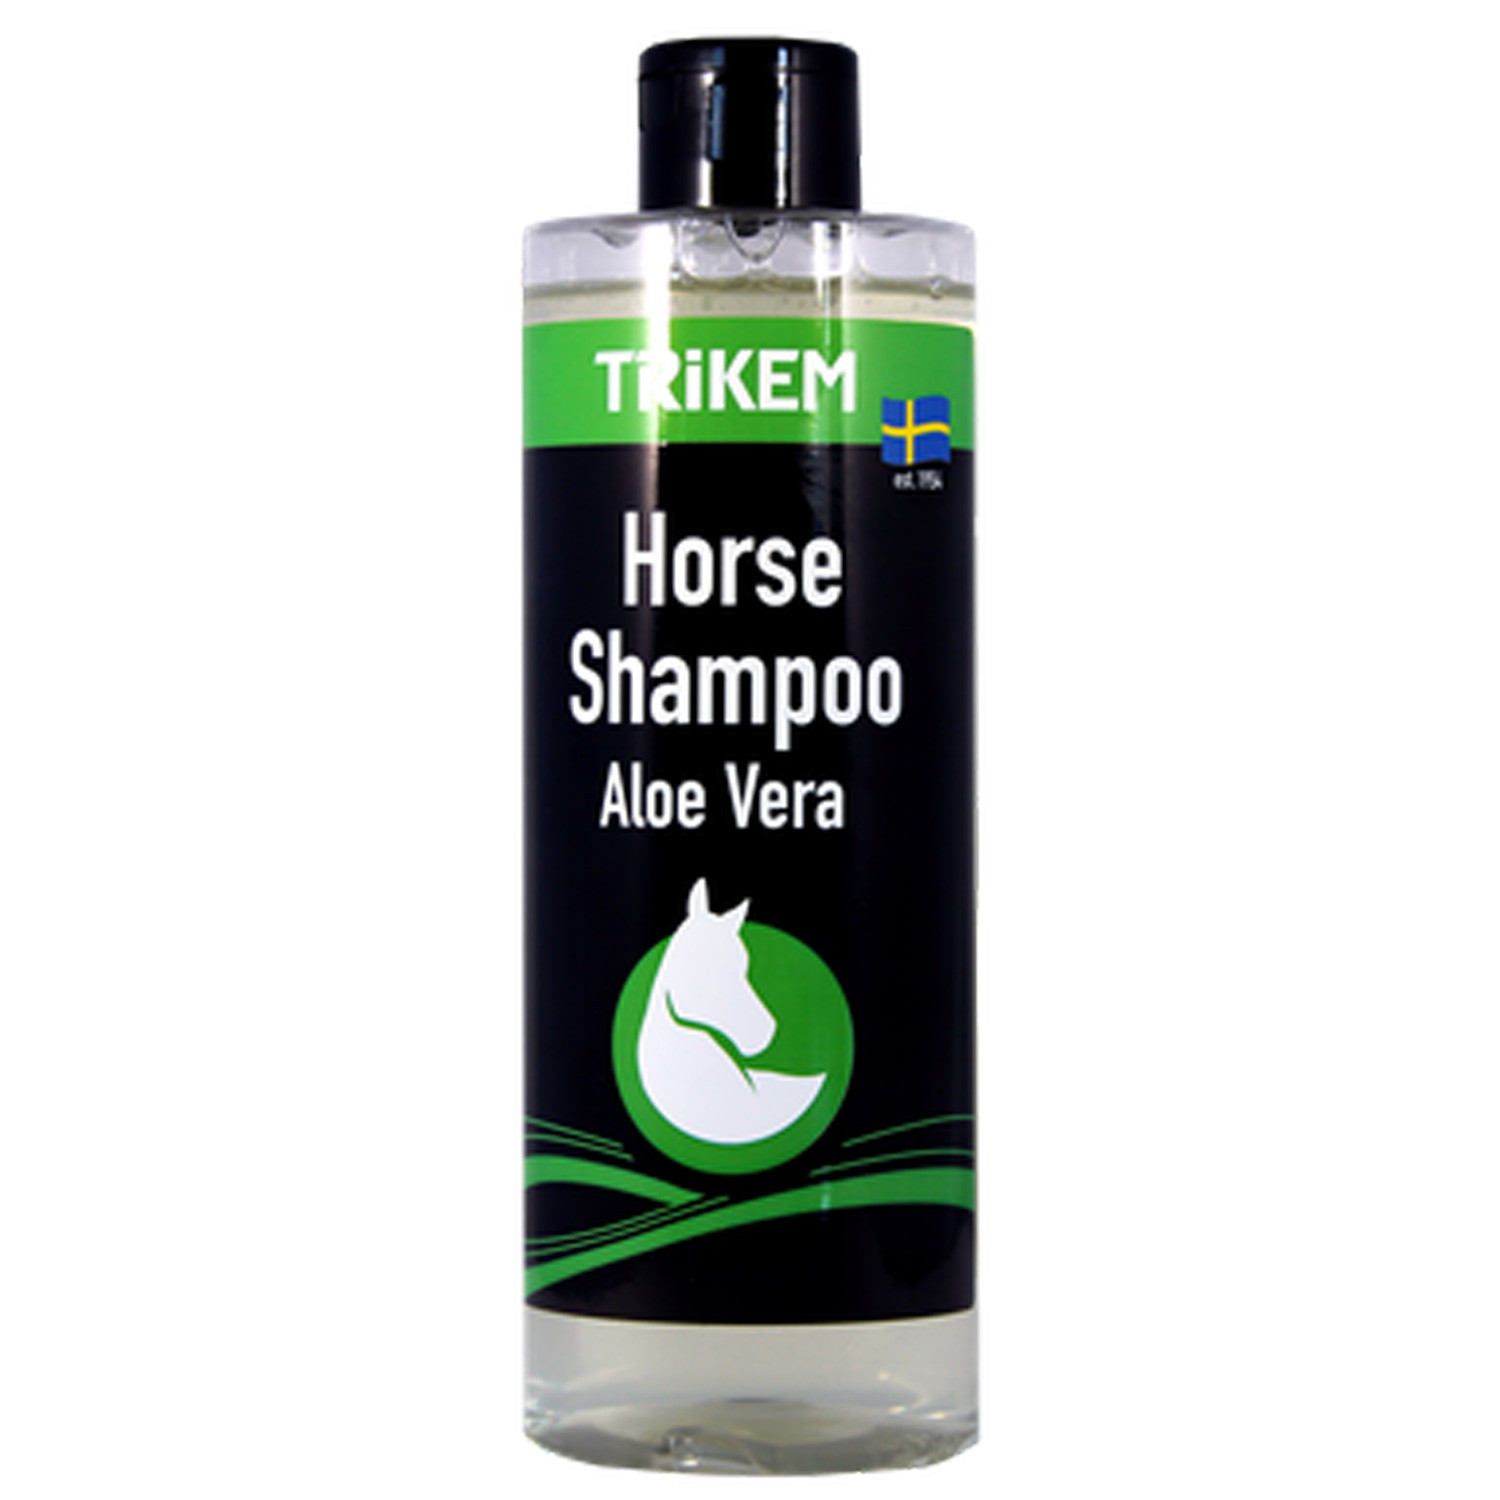 Horse schampo, 500ml